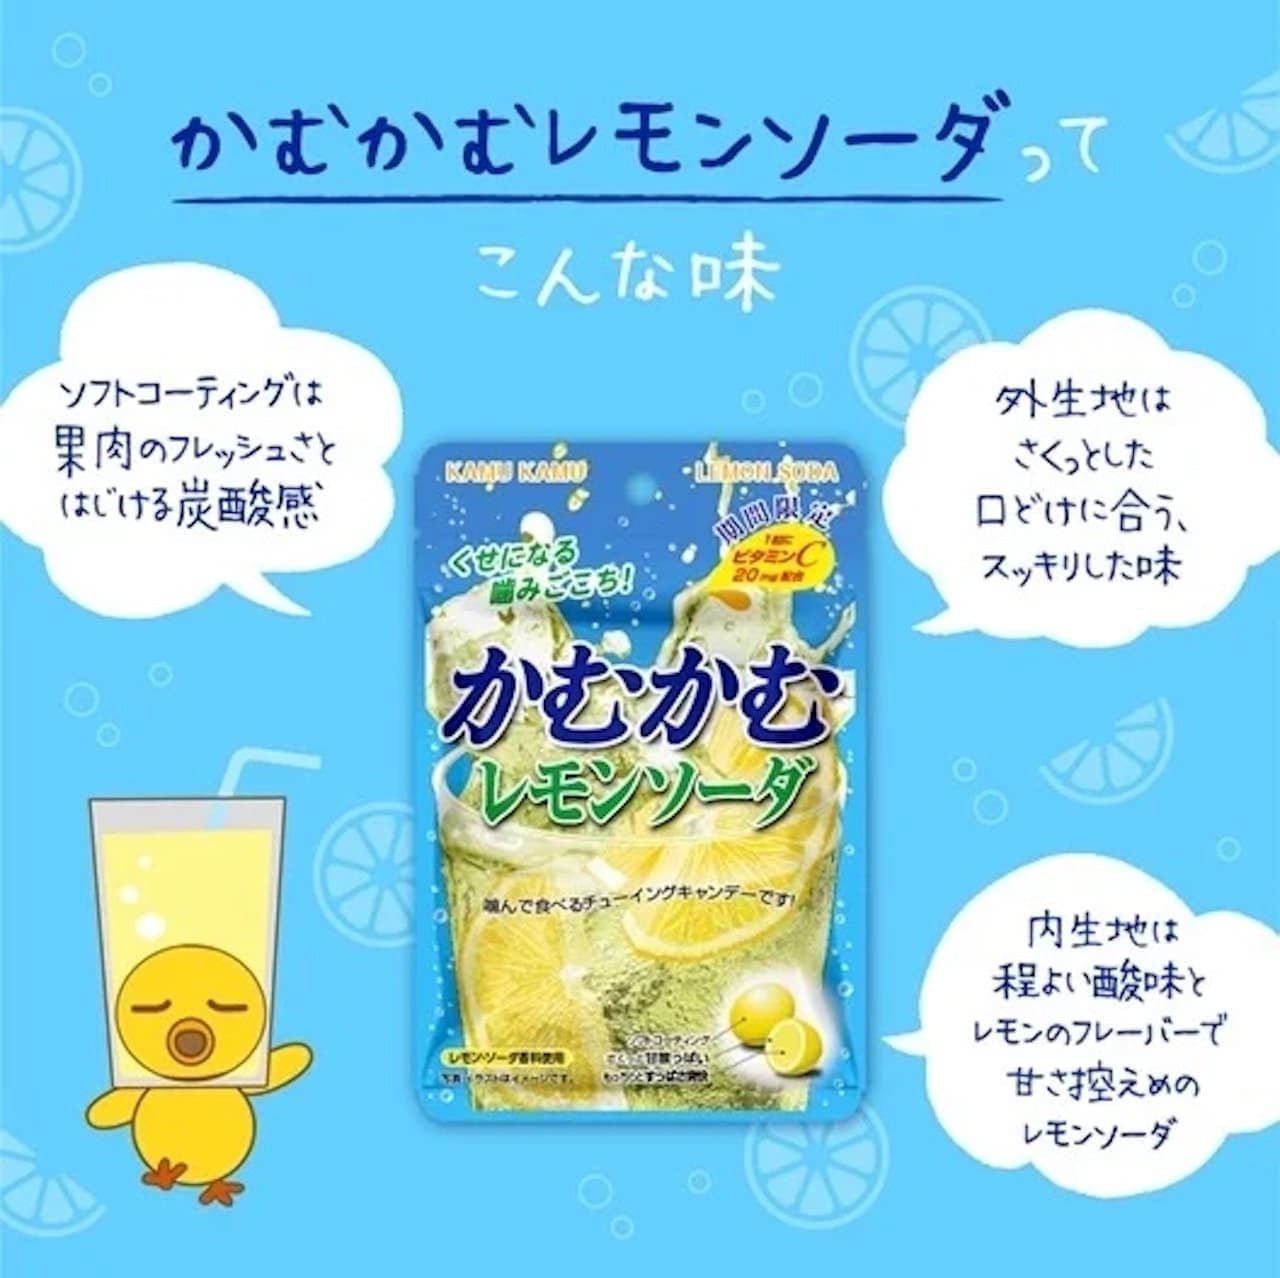 Kamu Kamu Lemon Soda Bag Type 30g" from Mitsubishi Shokuhin Co.